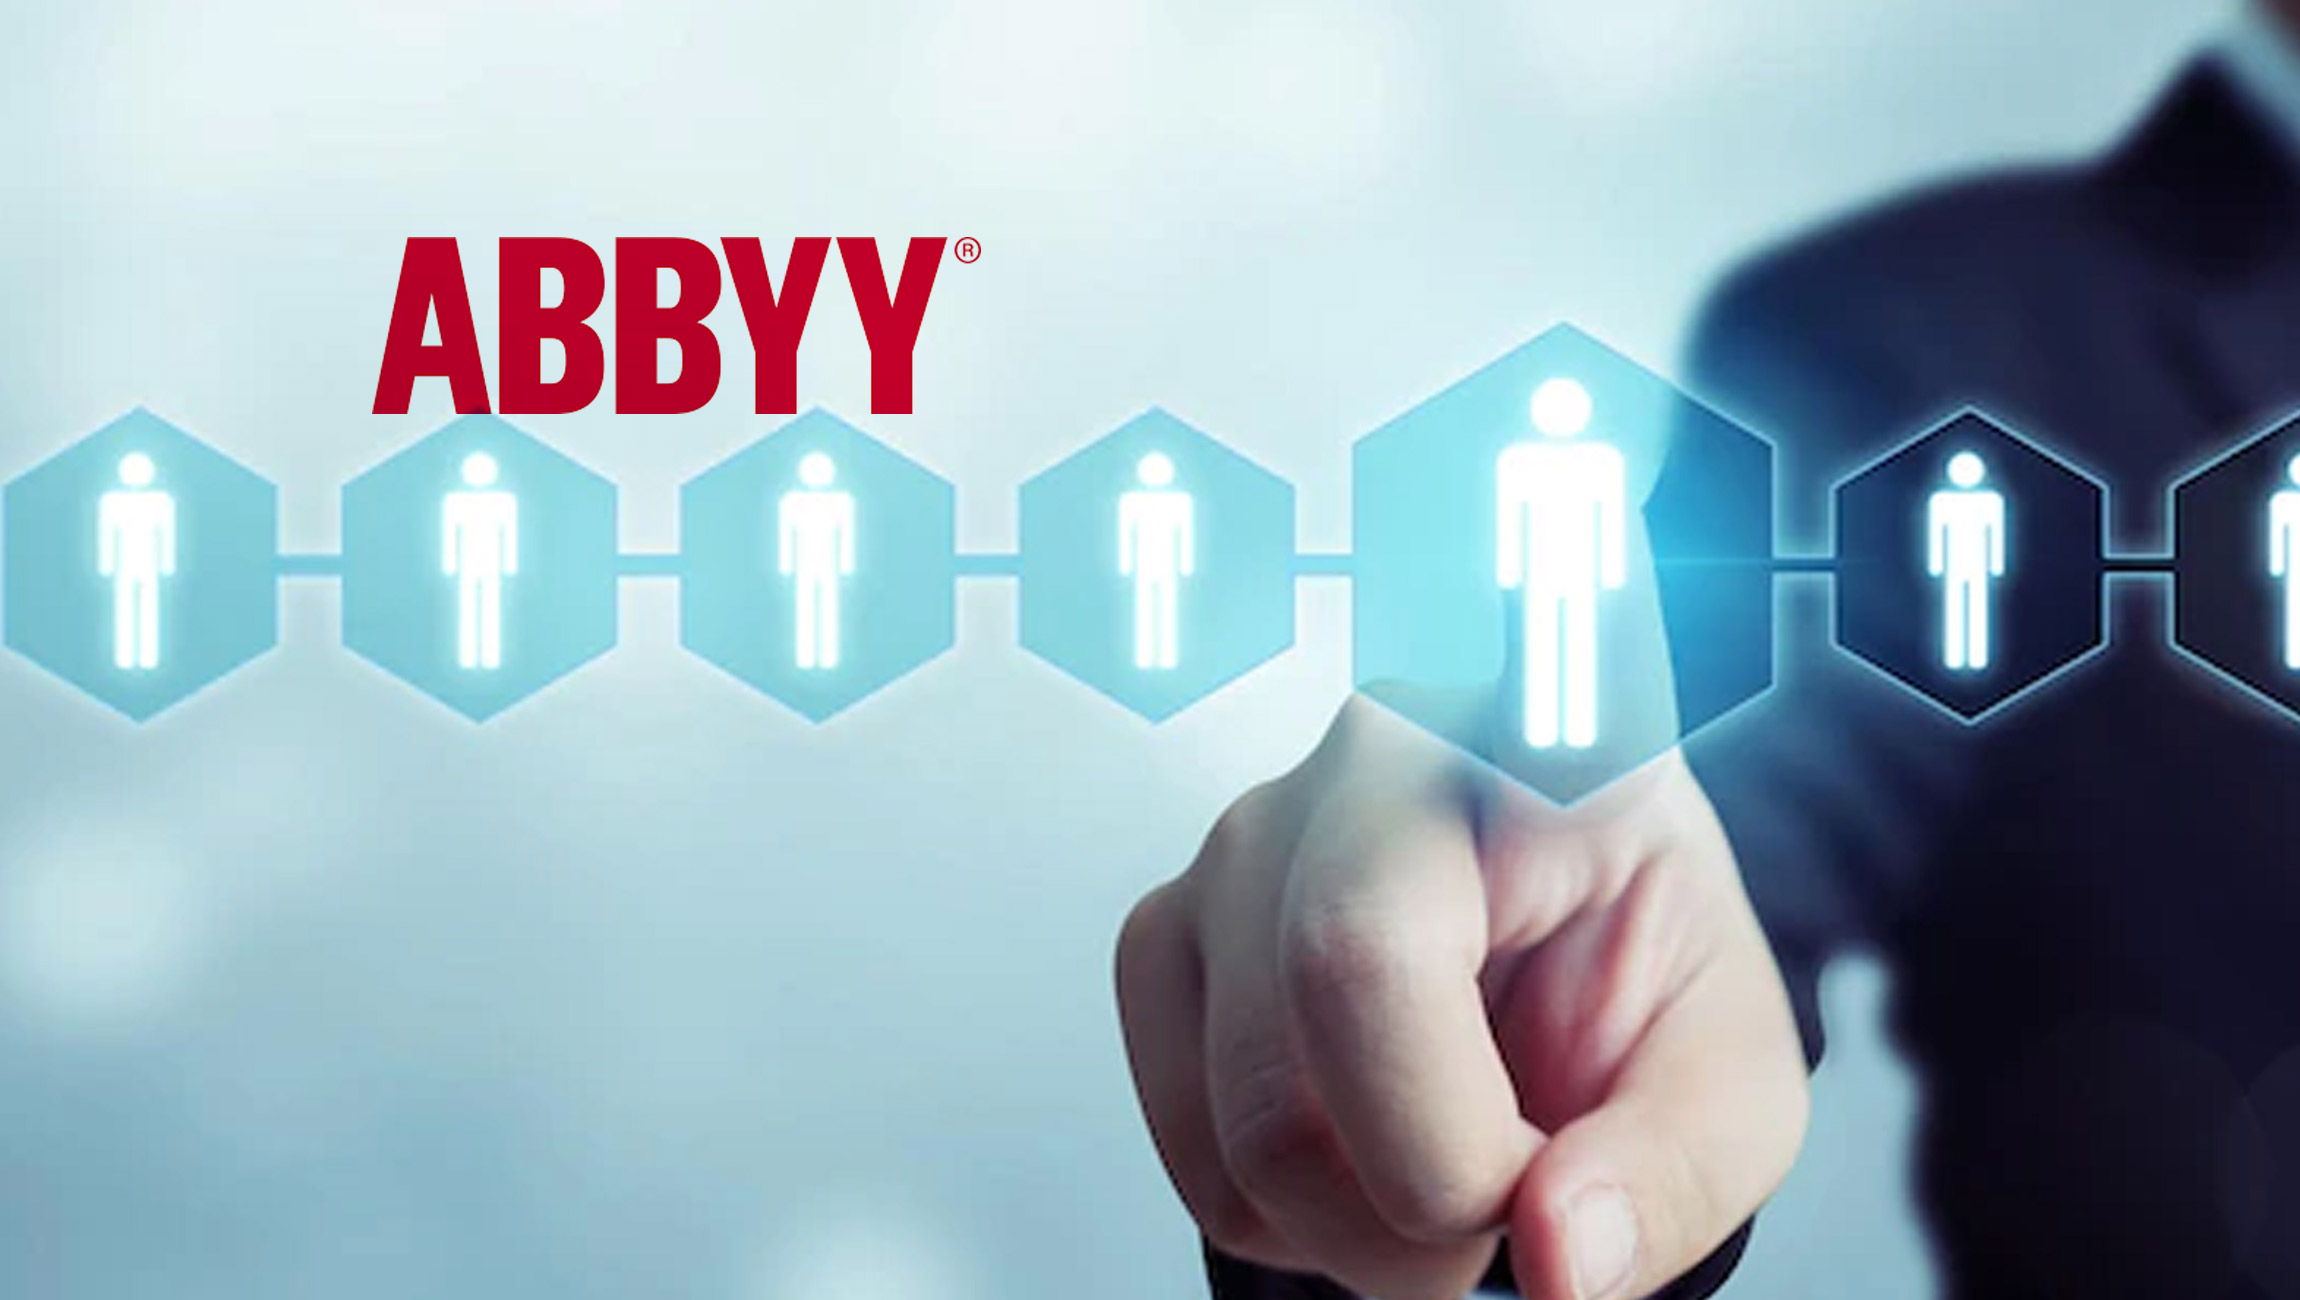 Patrick Jean benoemd tot Chief Product & Technology Officer bij ABBYY